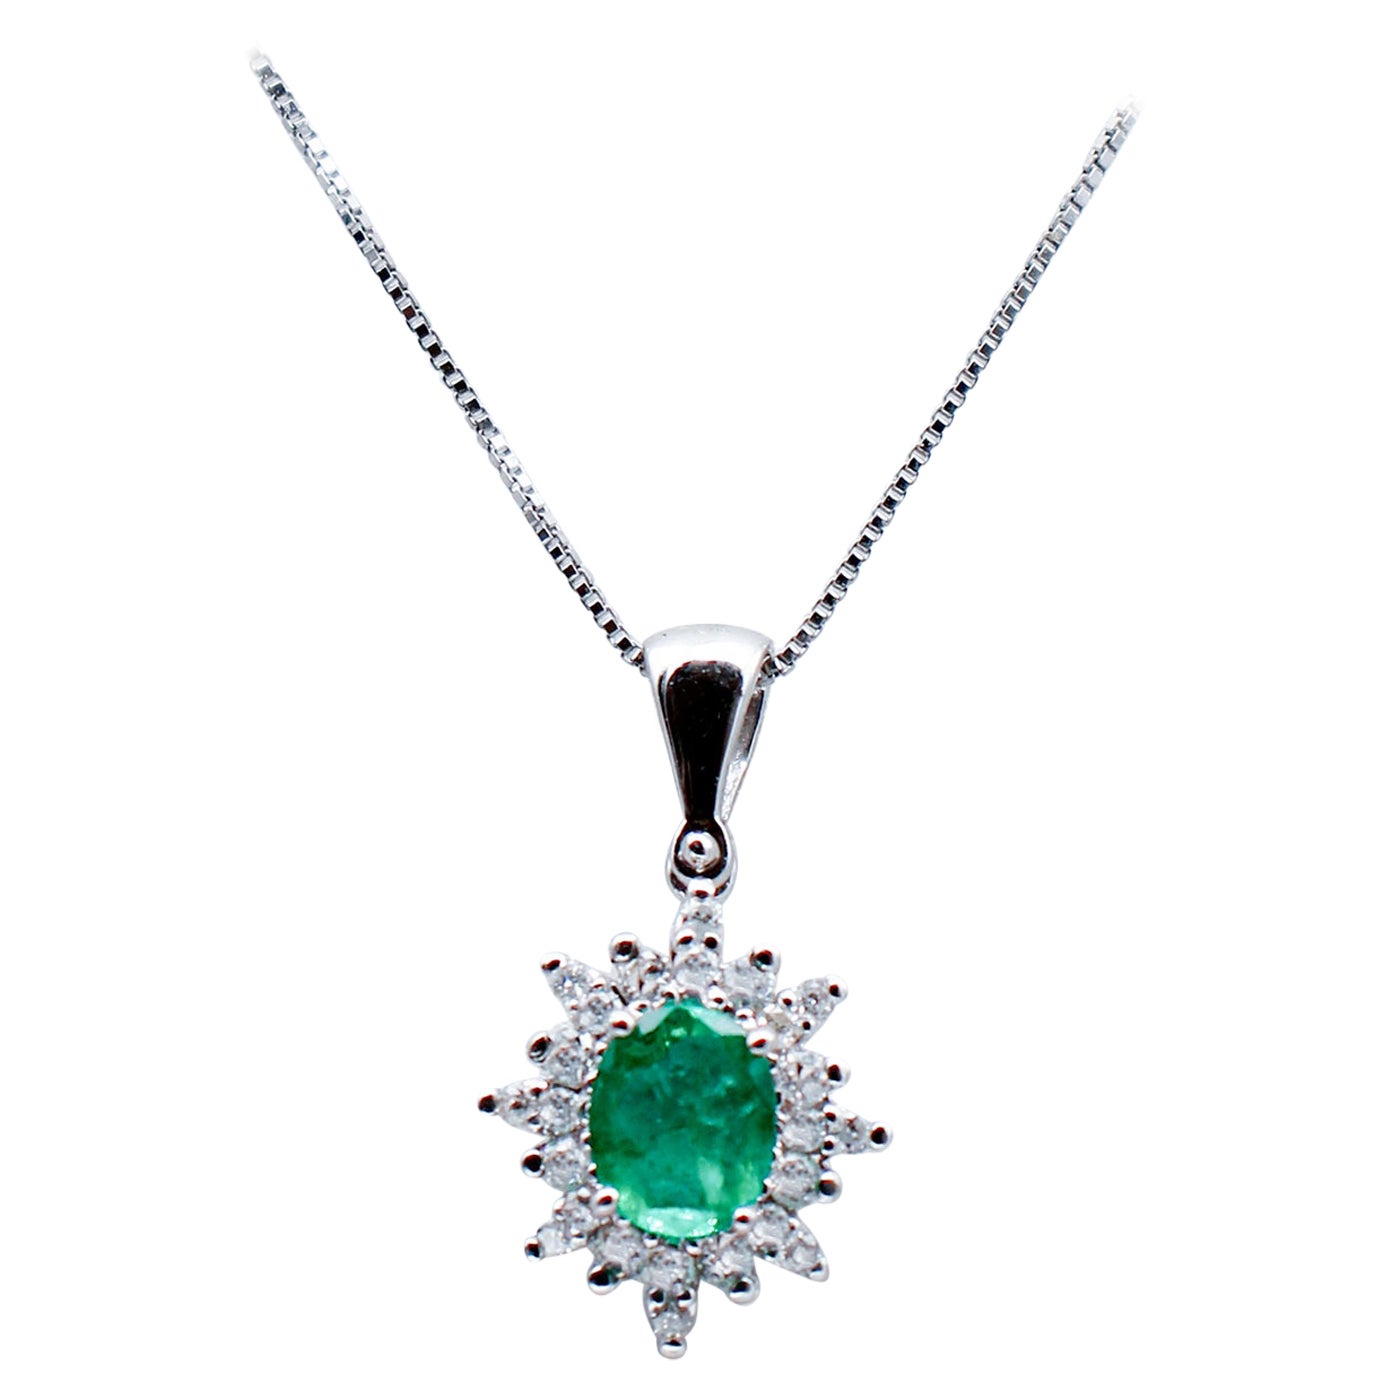 Emerald, Diamonds, 18 Karat White Gold Pendant Necklace